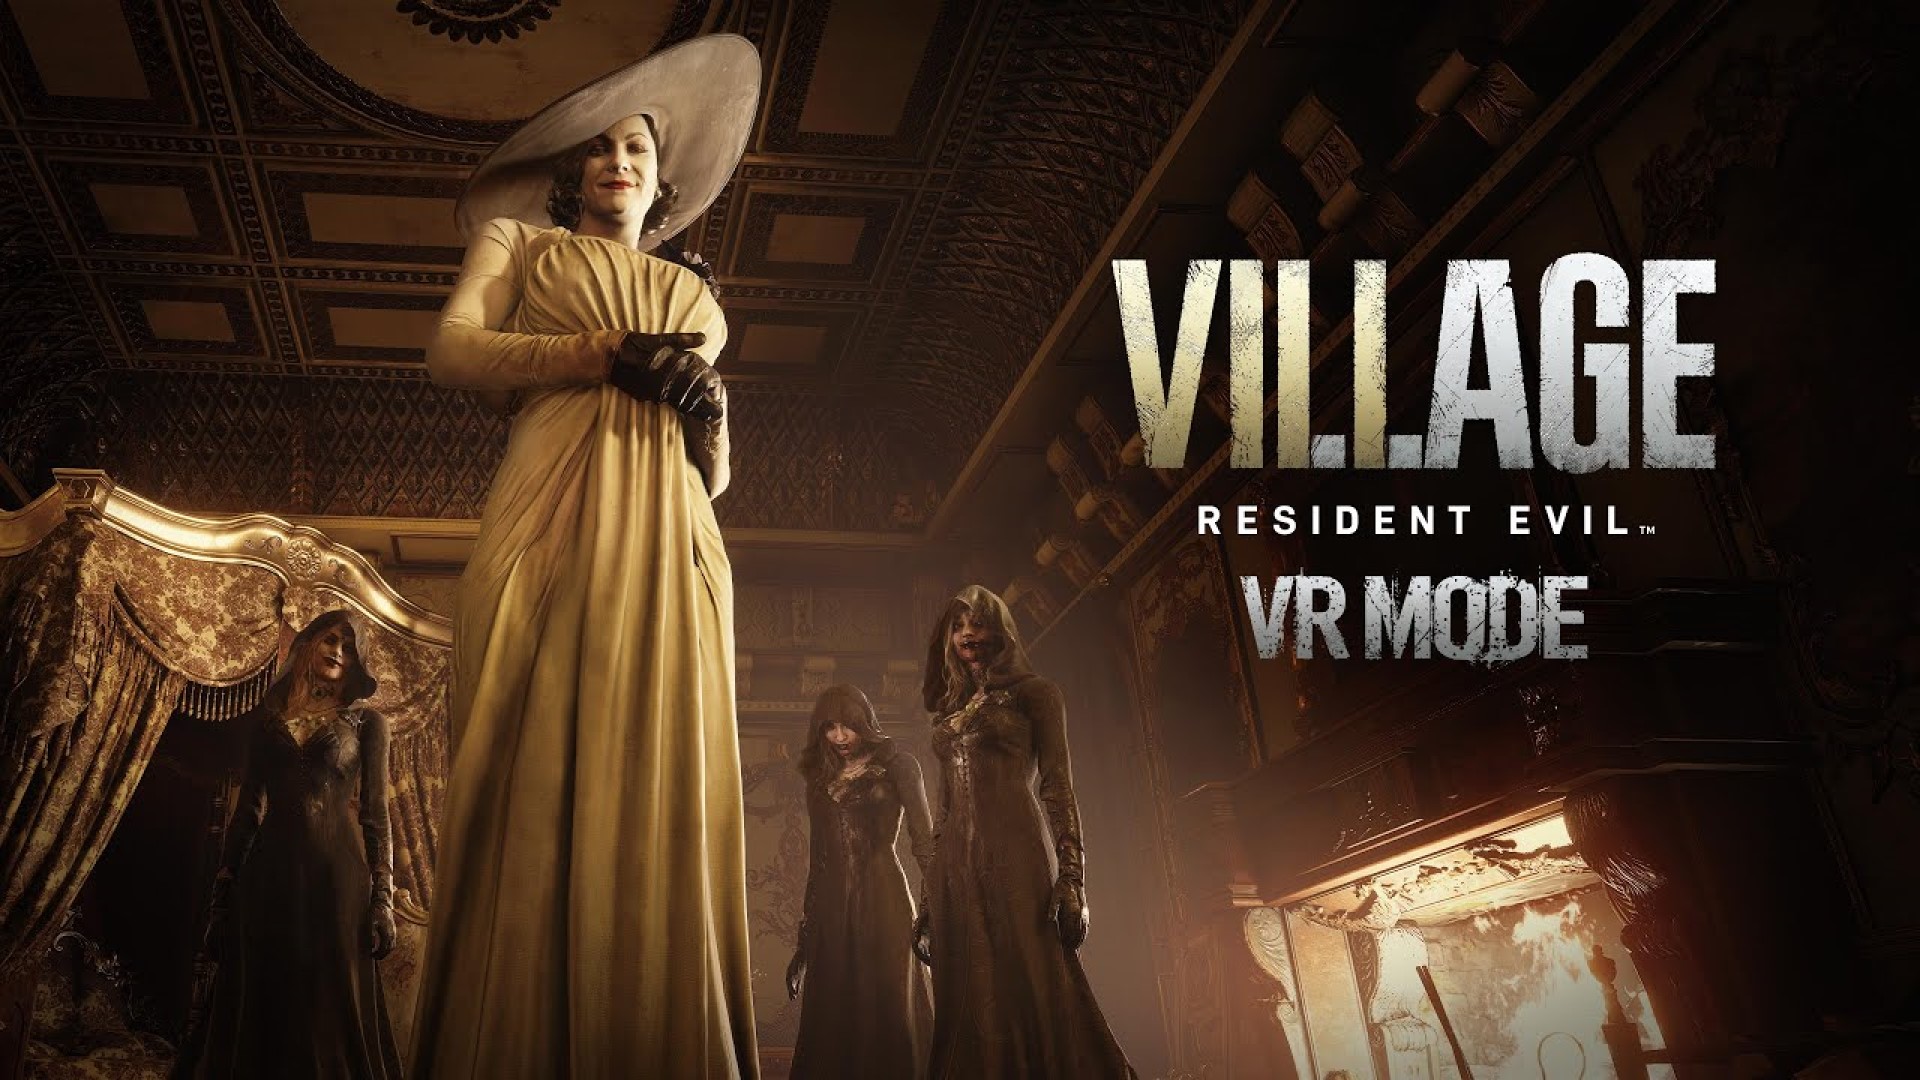 Resident Evil Village VR Mode Receives New Gameplay Trailer, Demo Announced